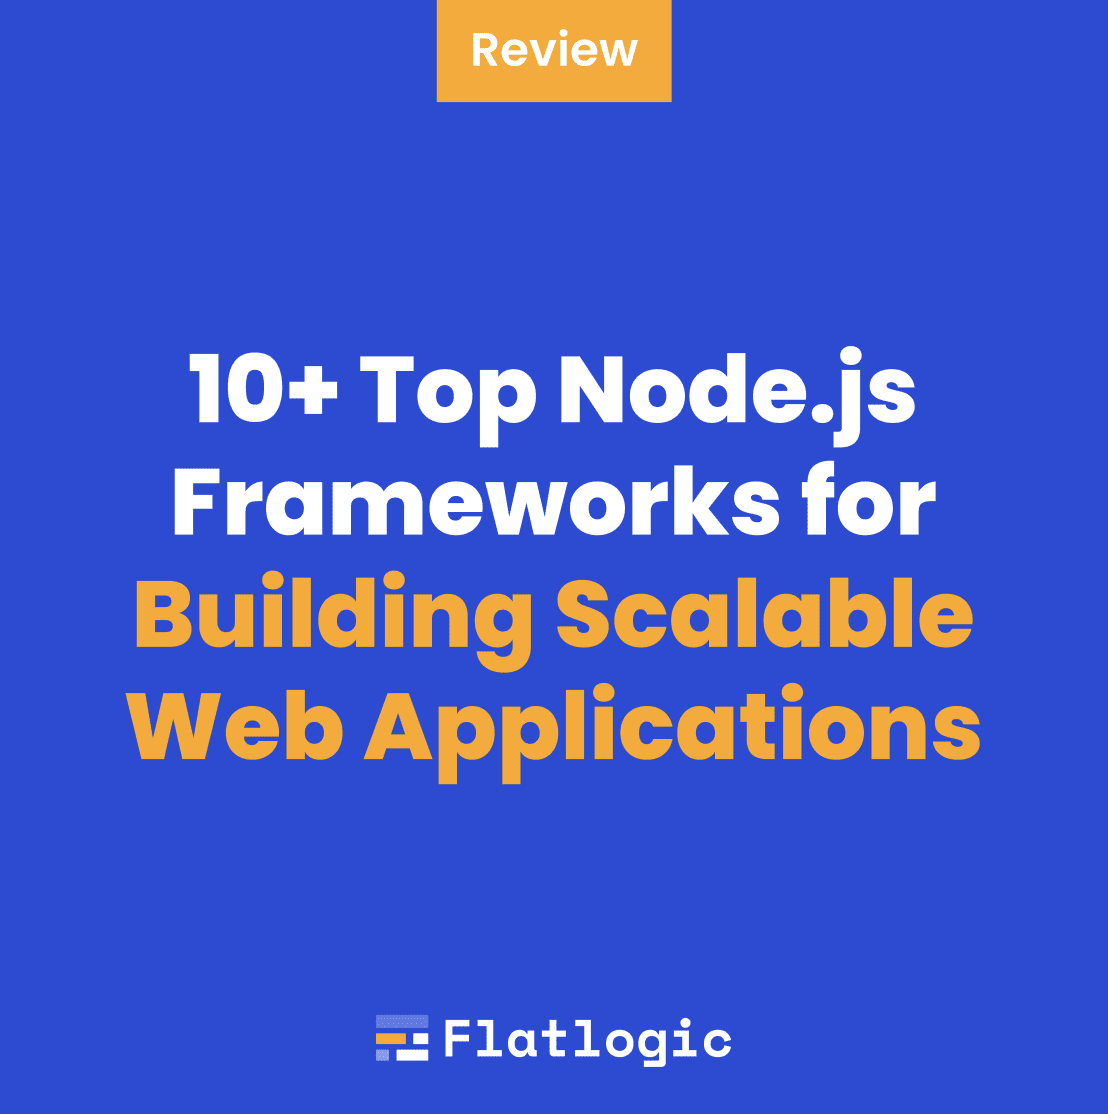 10+ Top Node.js Frameworks for Building Scalable Web Applications